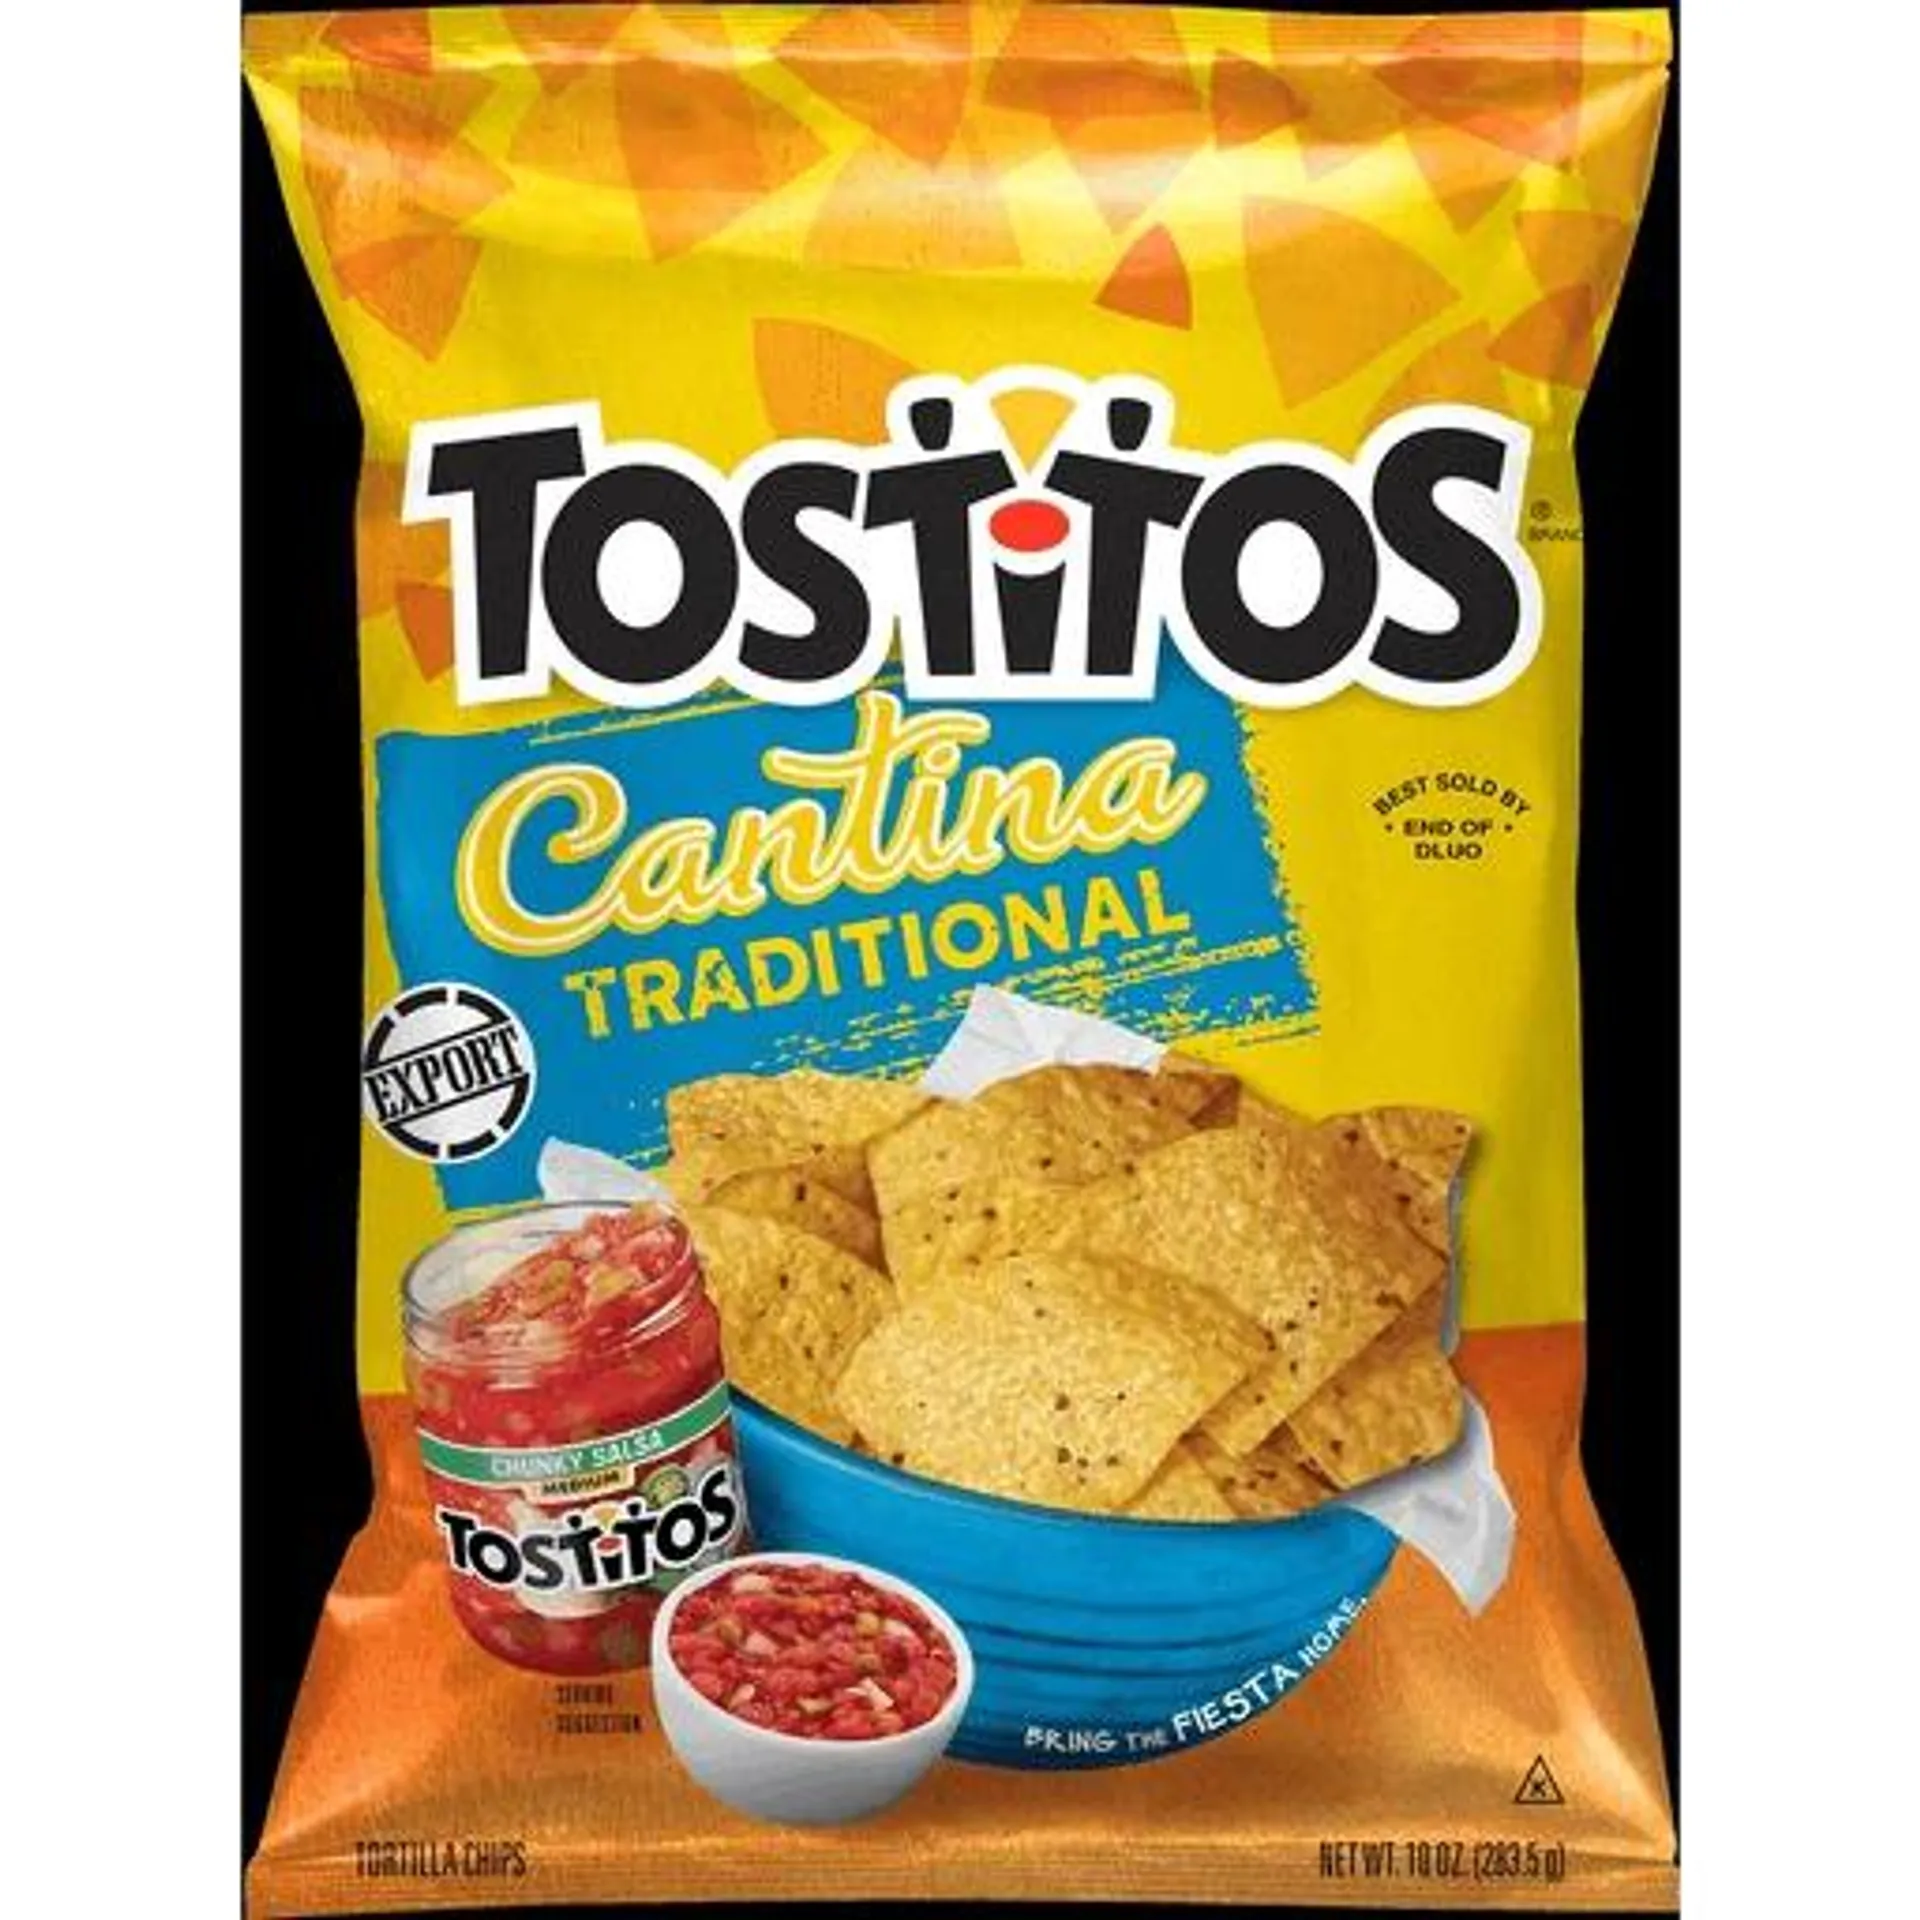 Tostitos Cantina Traditional Chips 10 oz bag